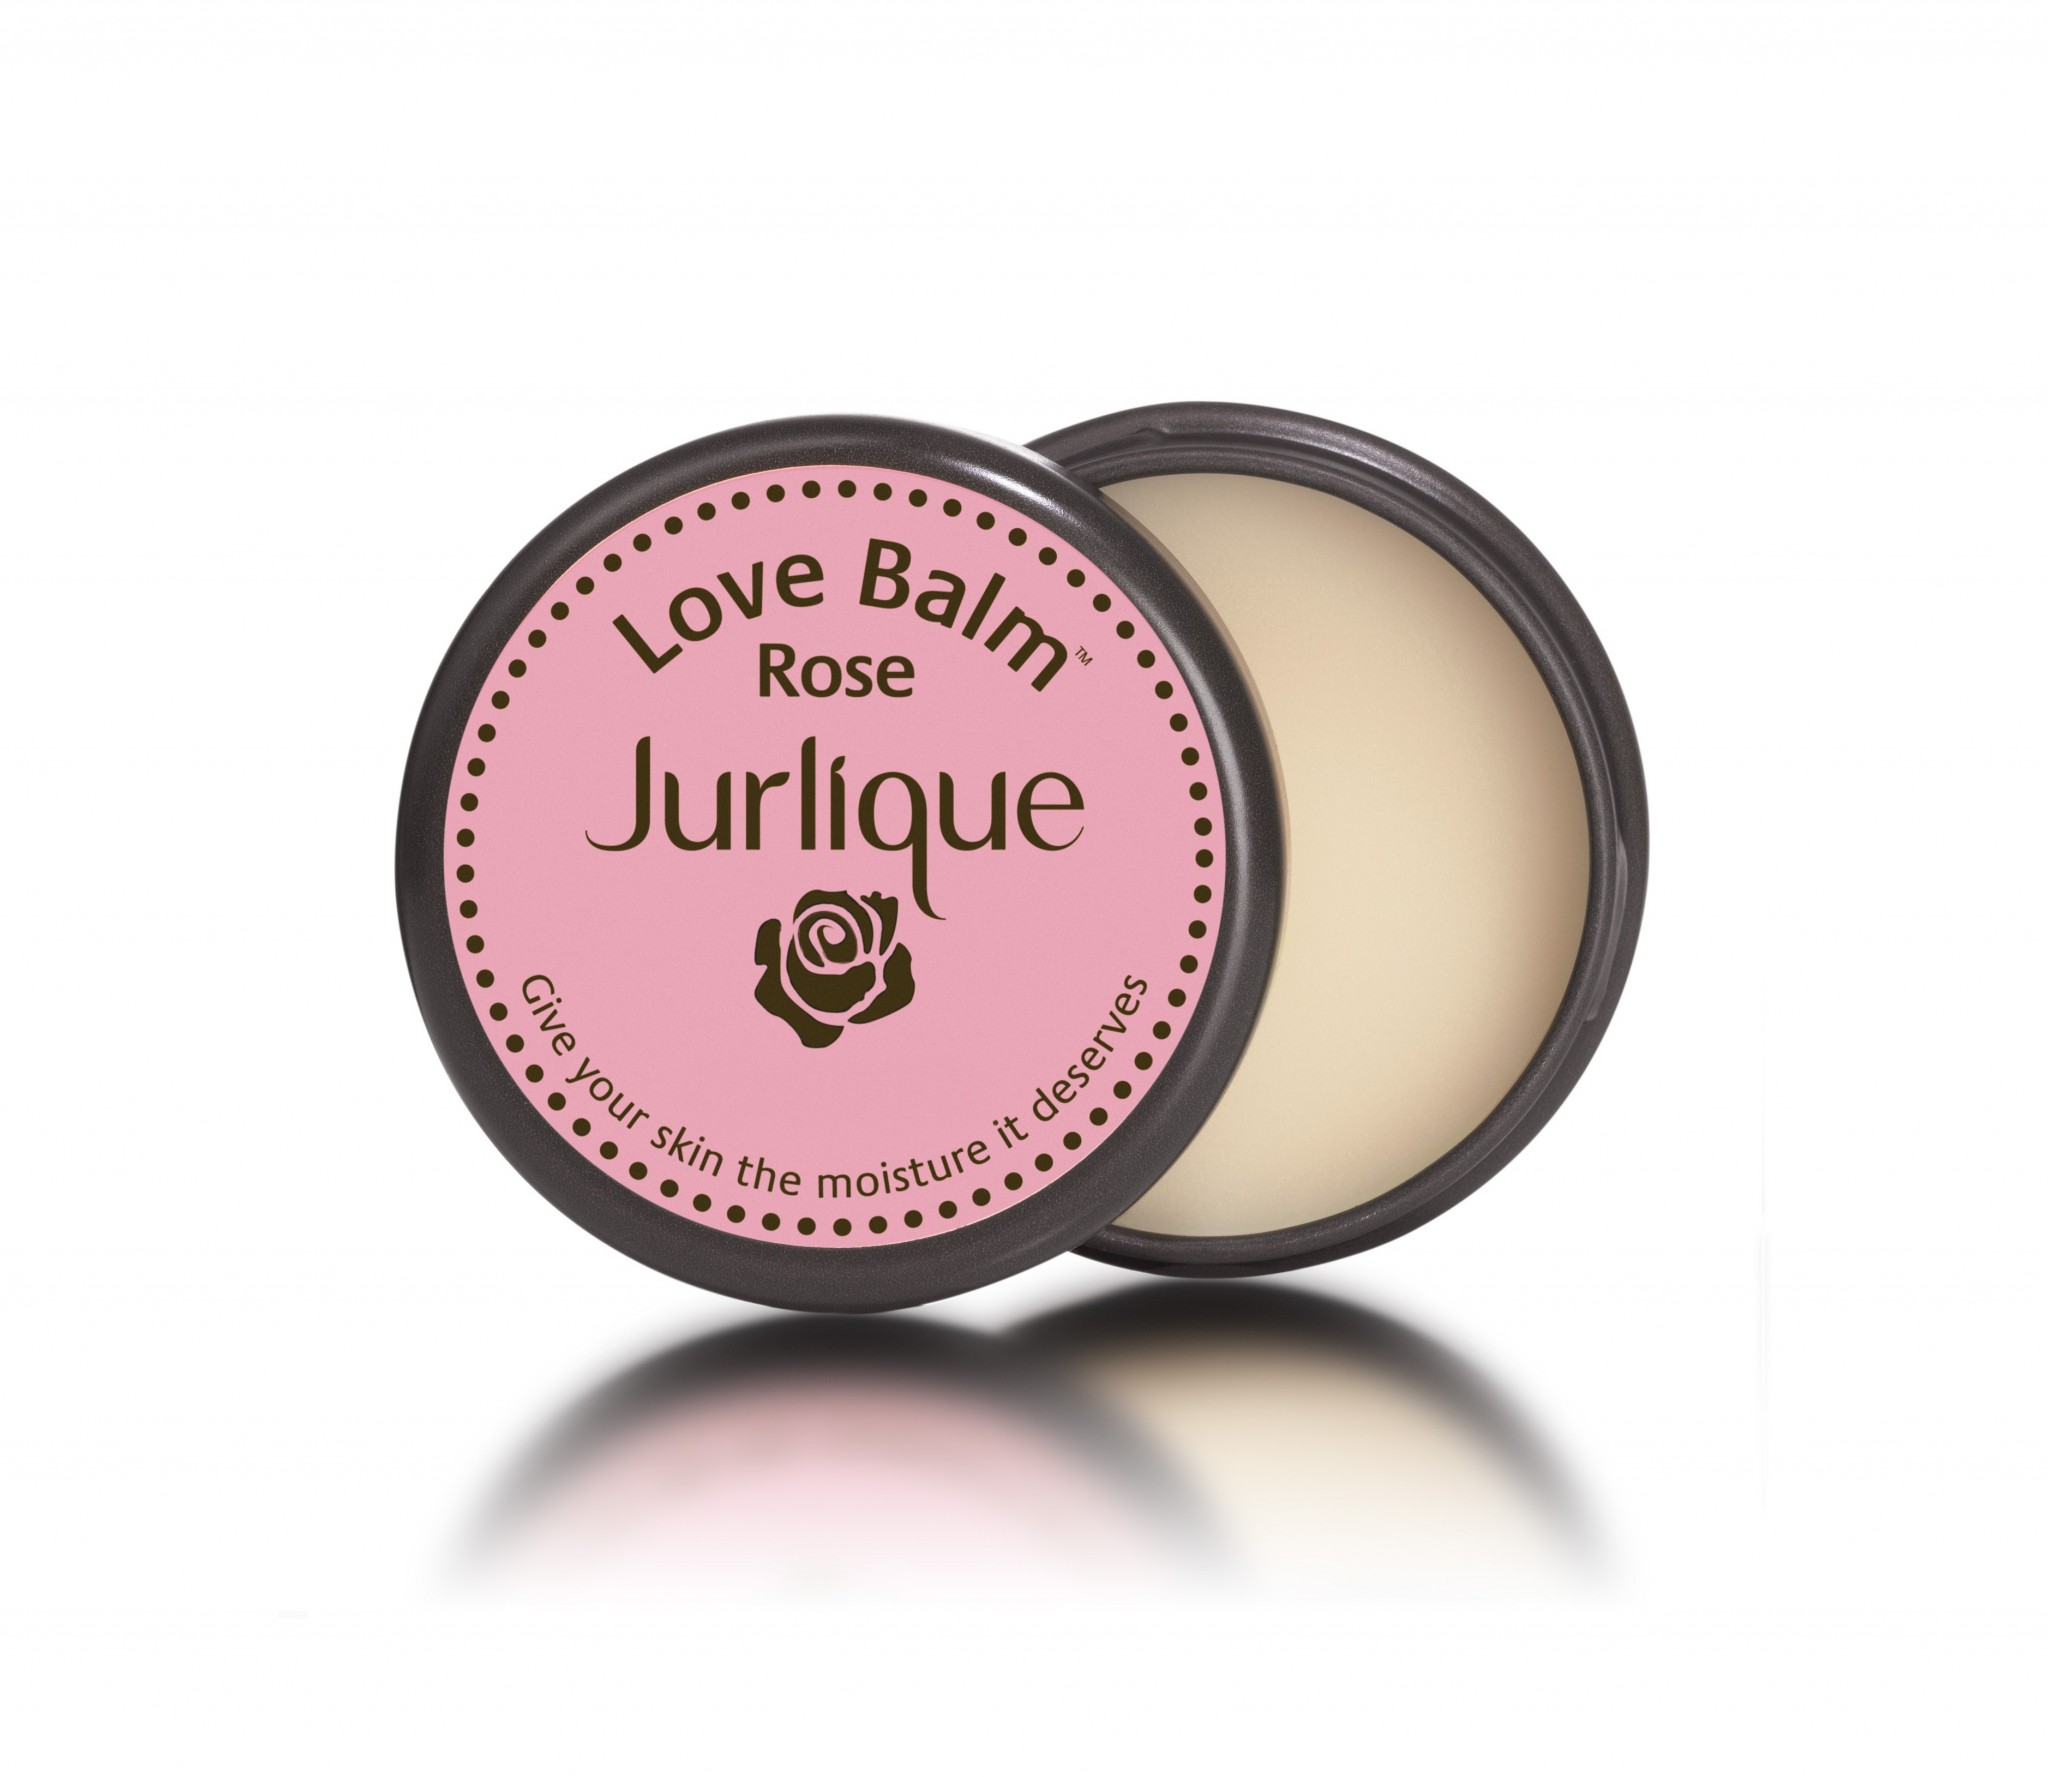 Jurlique_Rose Love Balm 15ml (2)